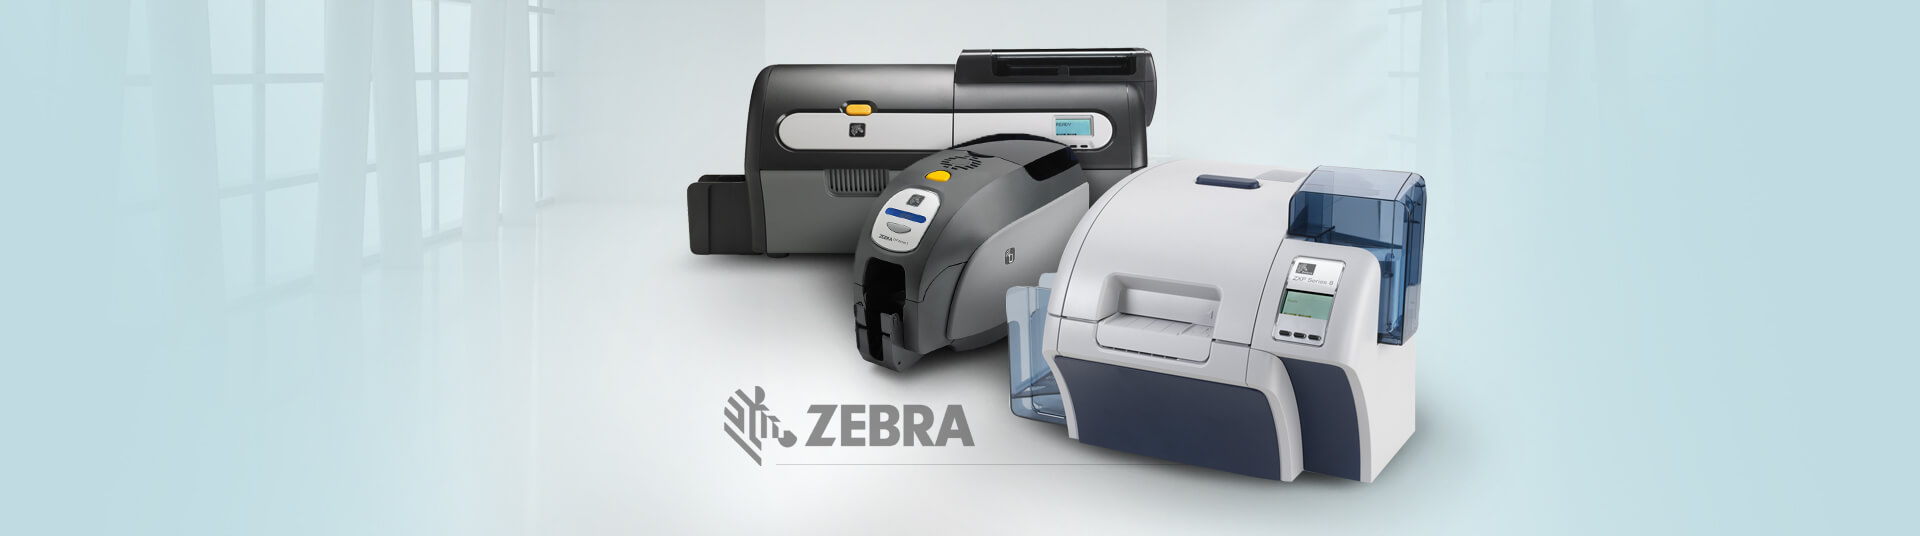 Zebra ID Badge Printer